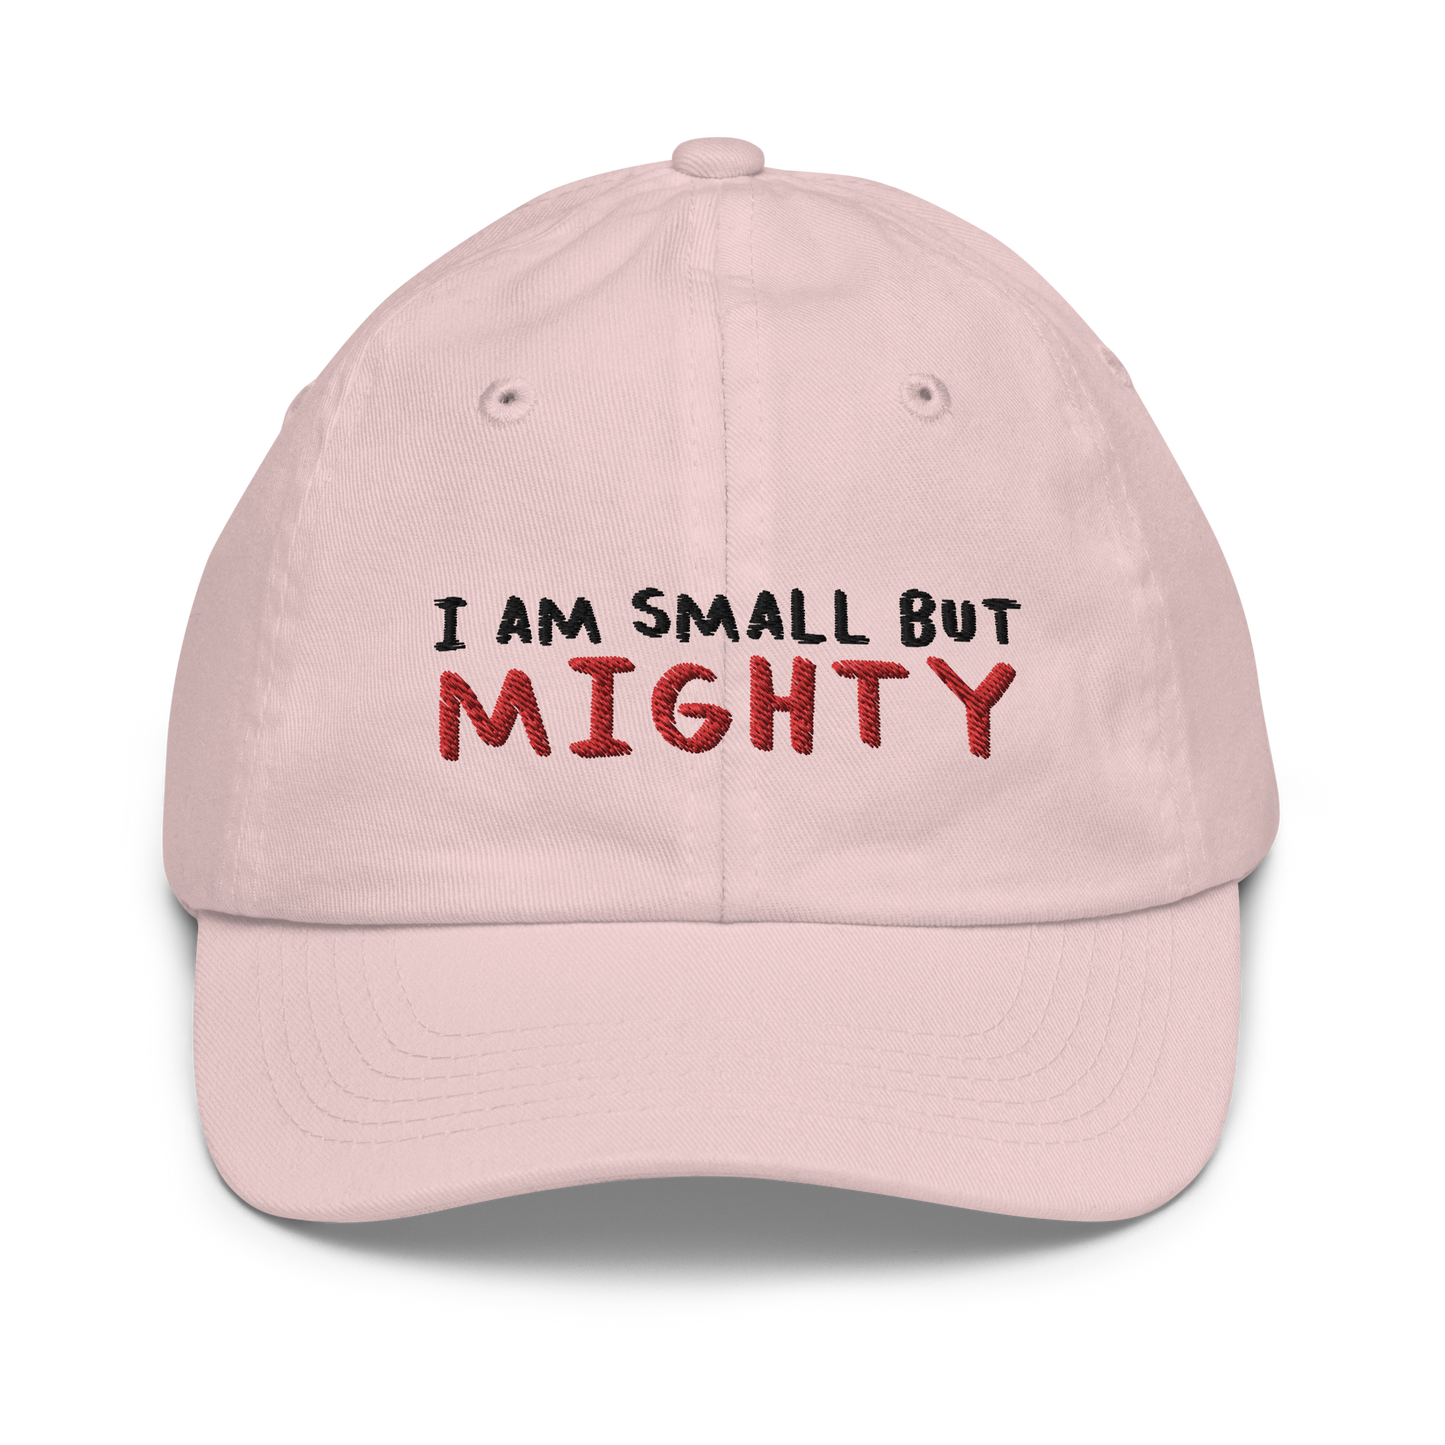 I AM SMALL BUT MIGHTY - Youth baseball cap